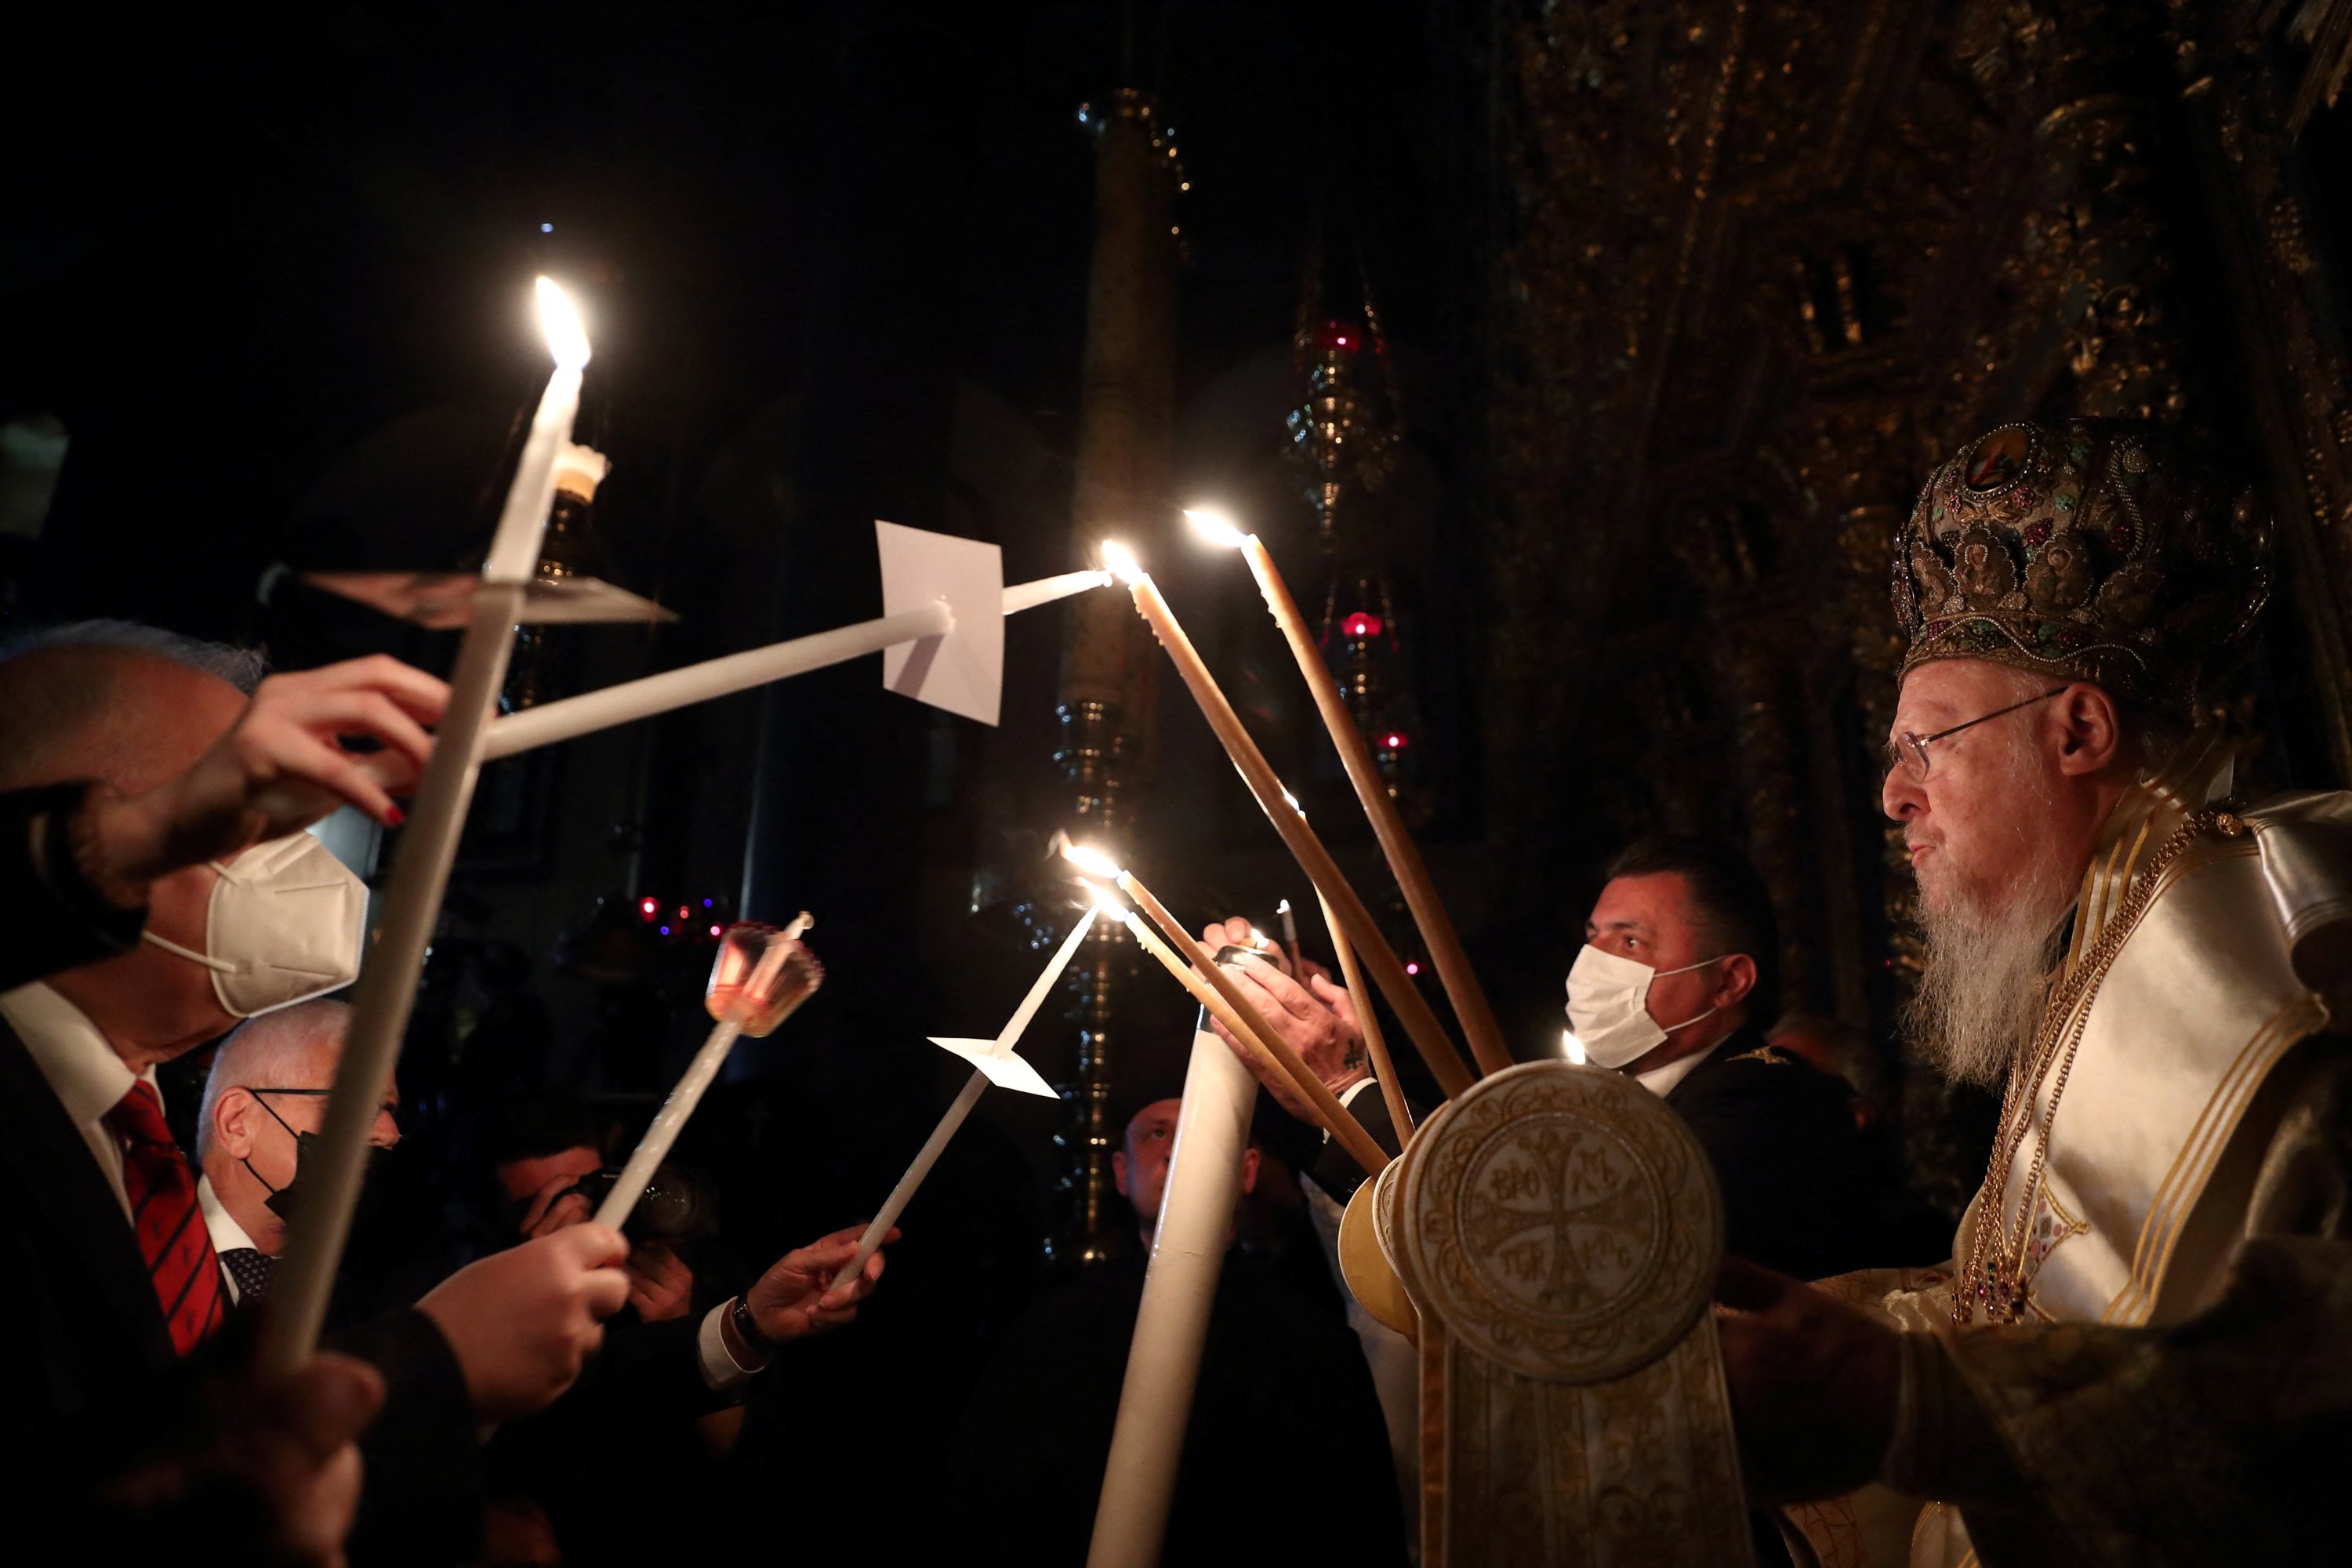 Turkey’s Orthodox community marks Easter Sunday 